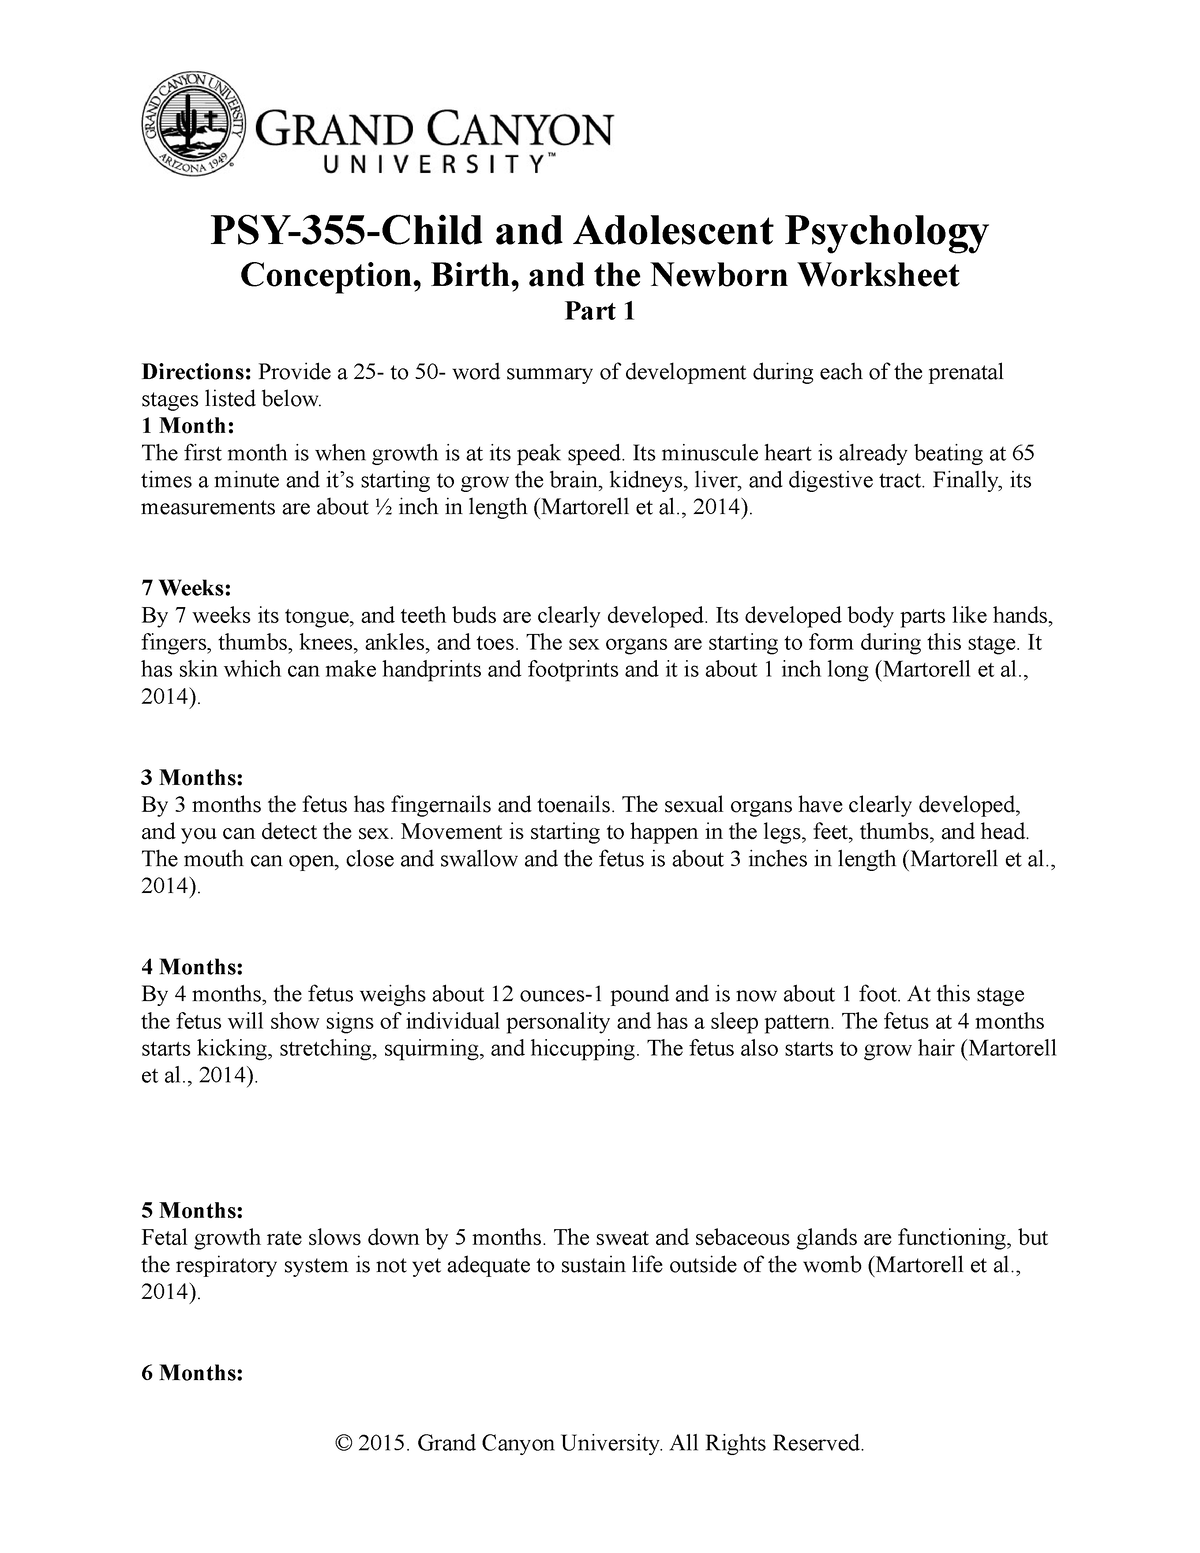 prenatal-worksheet-sally-davey-psy-355-child-and-adolescent-studocu